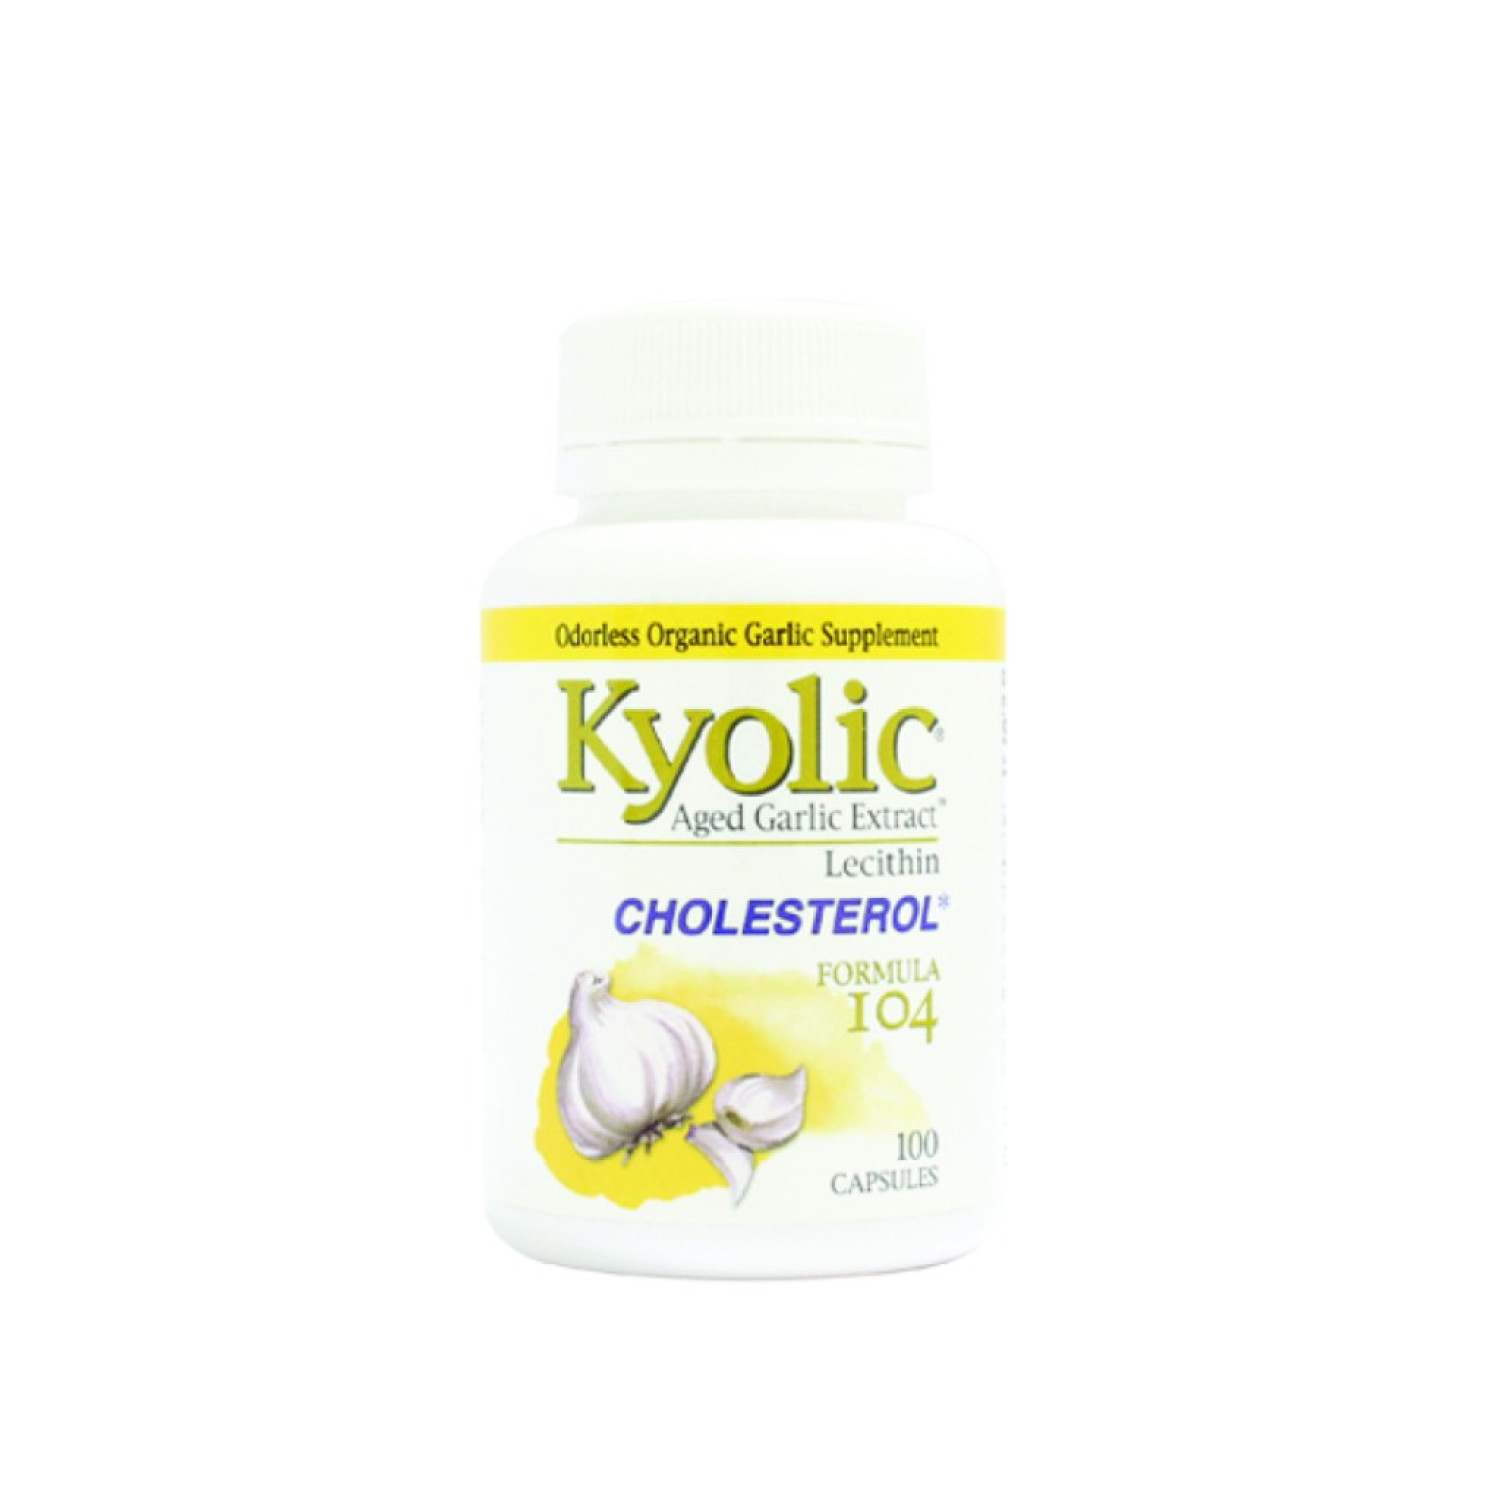 Kyolic Kyolic 104 Cholesterol Plus Lecithin 